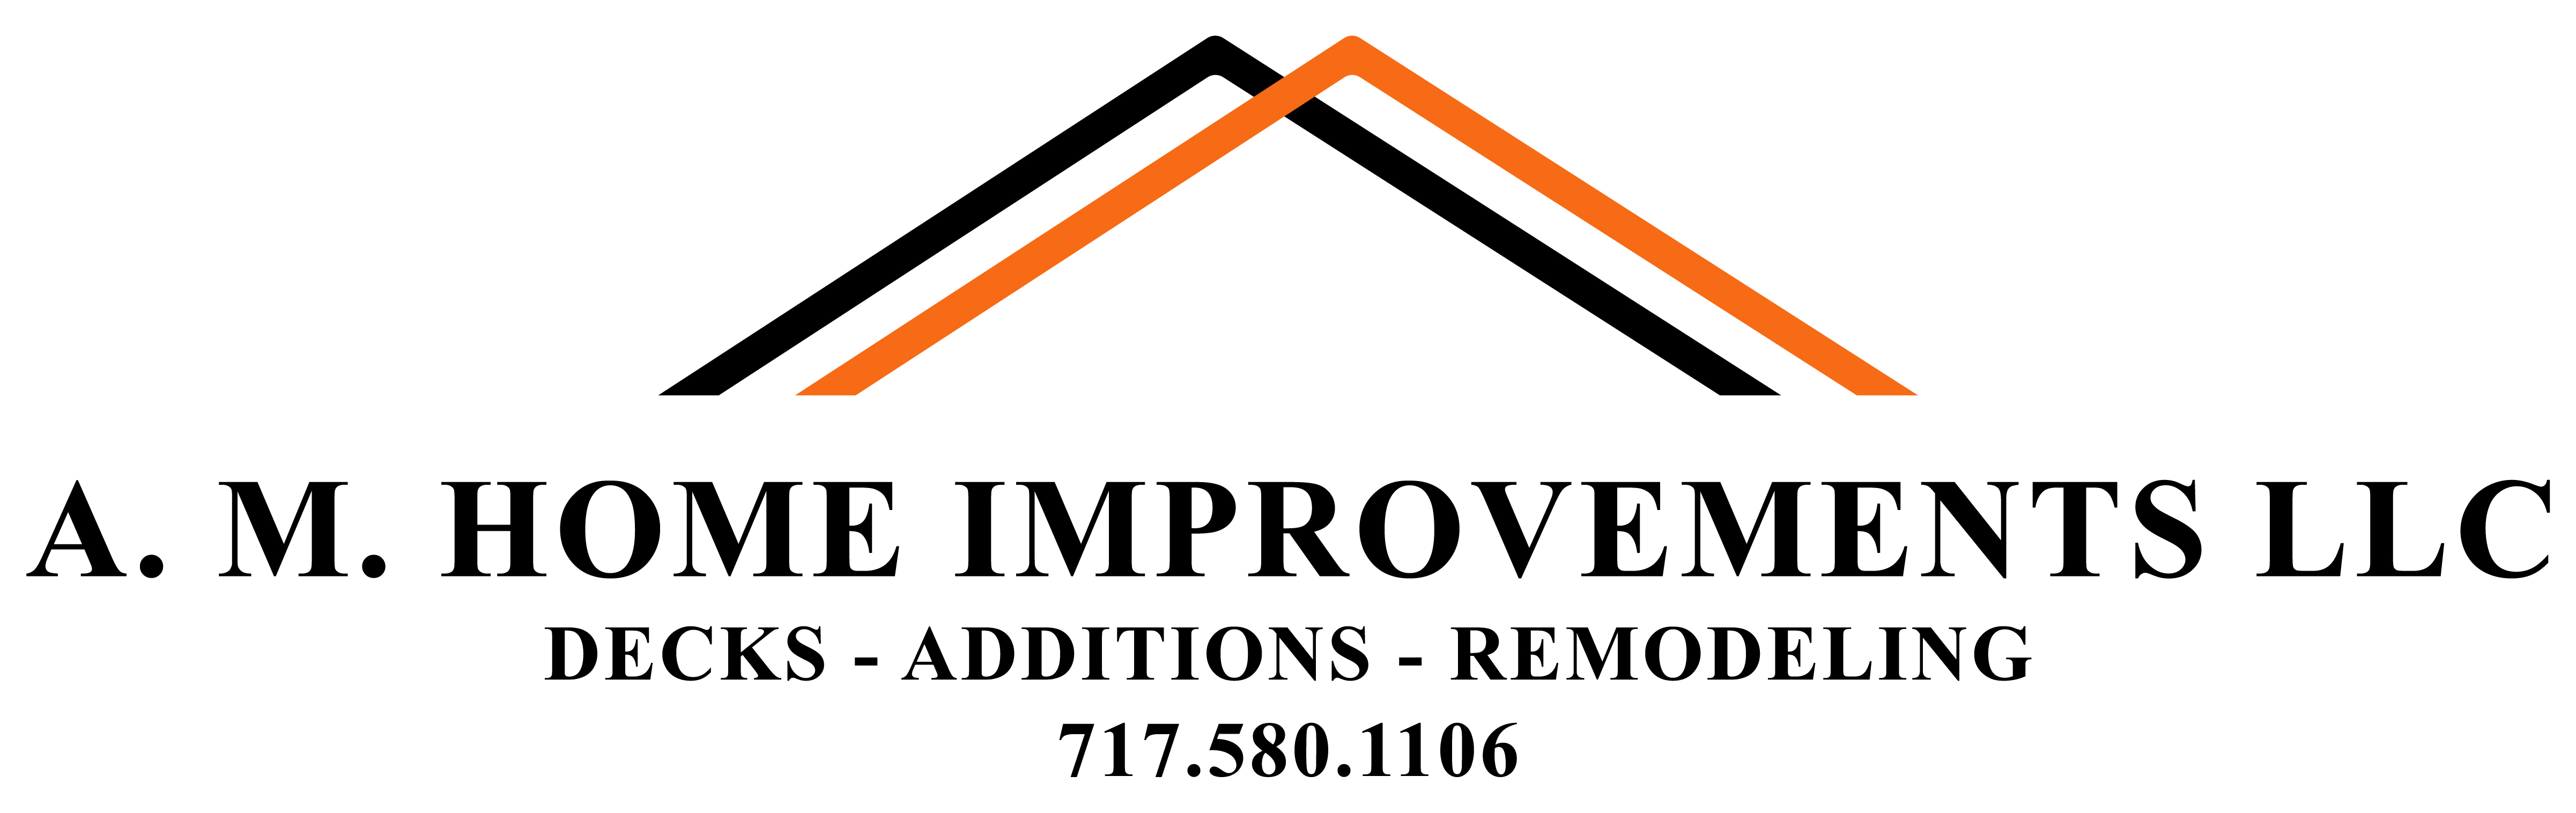 AM Home Improvements Logo